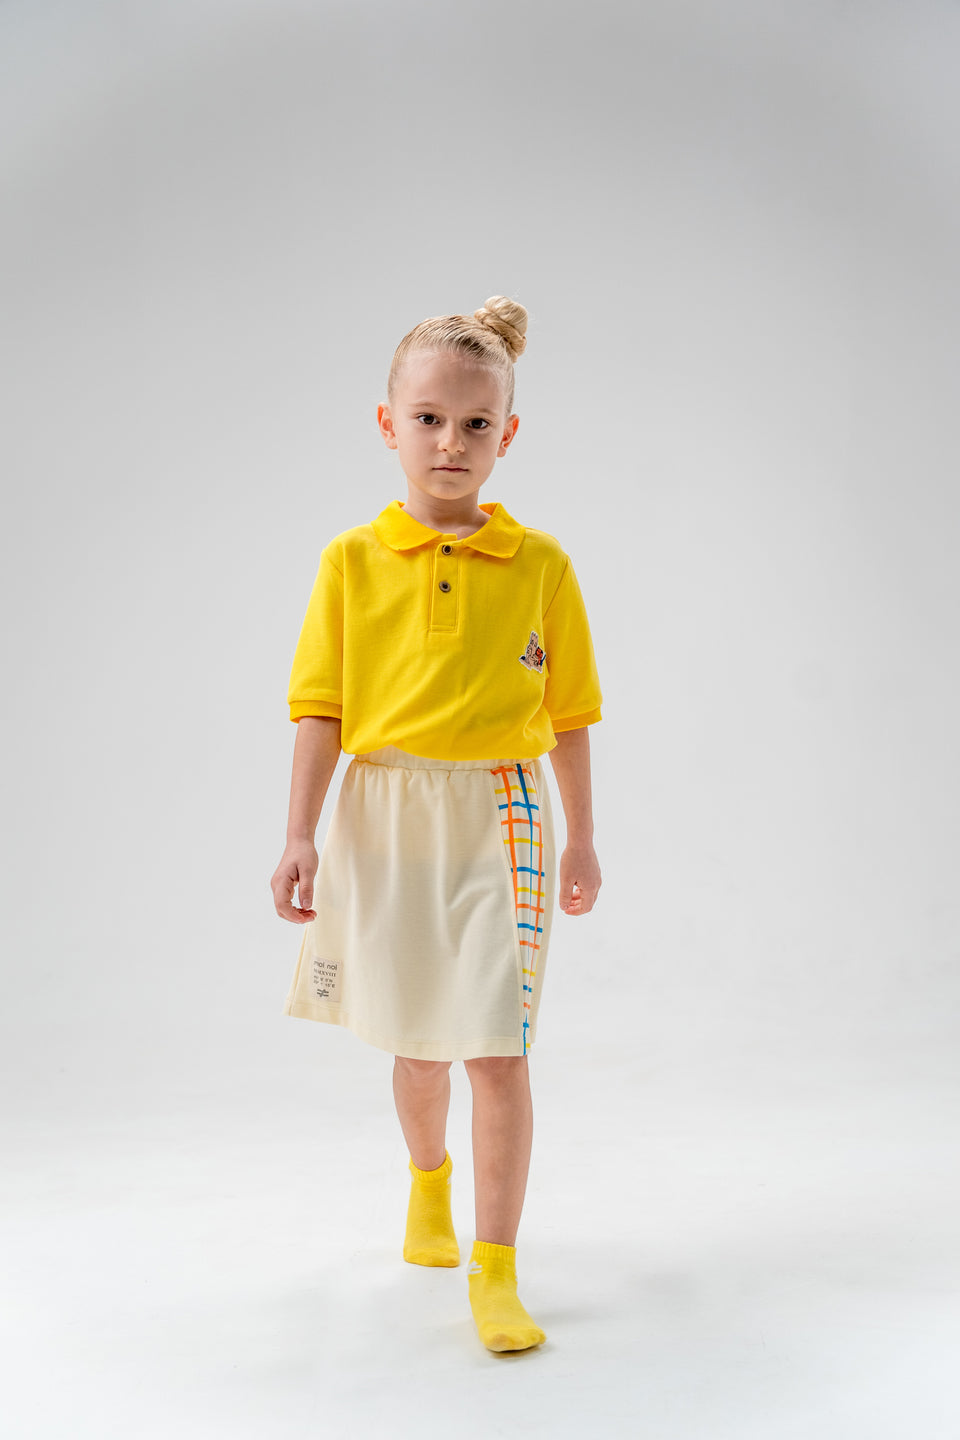 kids-atelier-moi-noi-kid-baby-girl-beige-plaid-trim-cotton-skirt-mn7517-beige